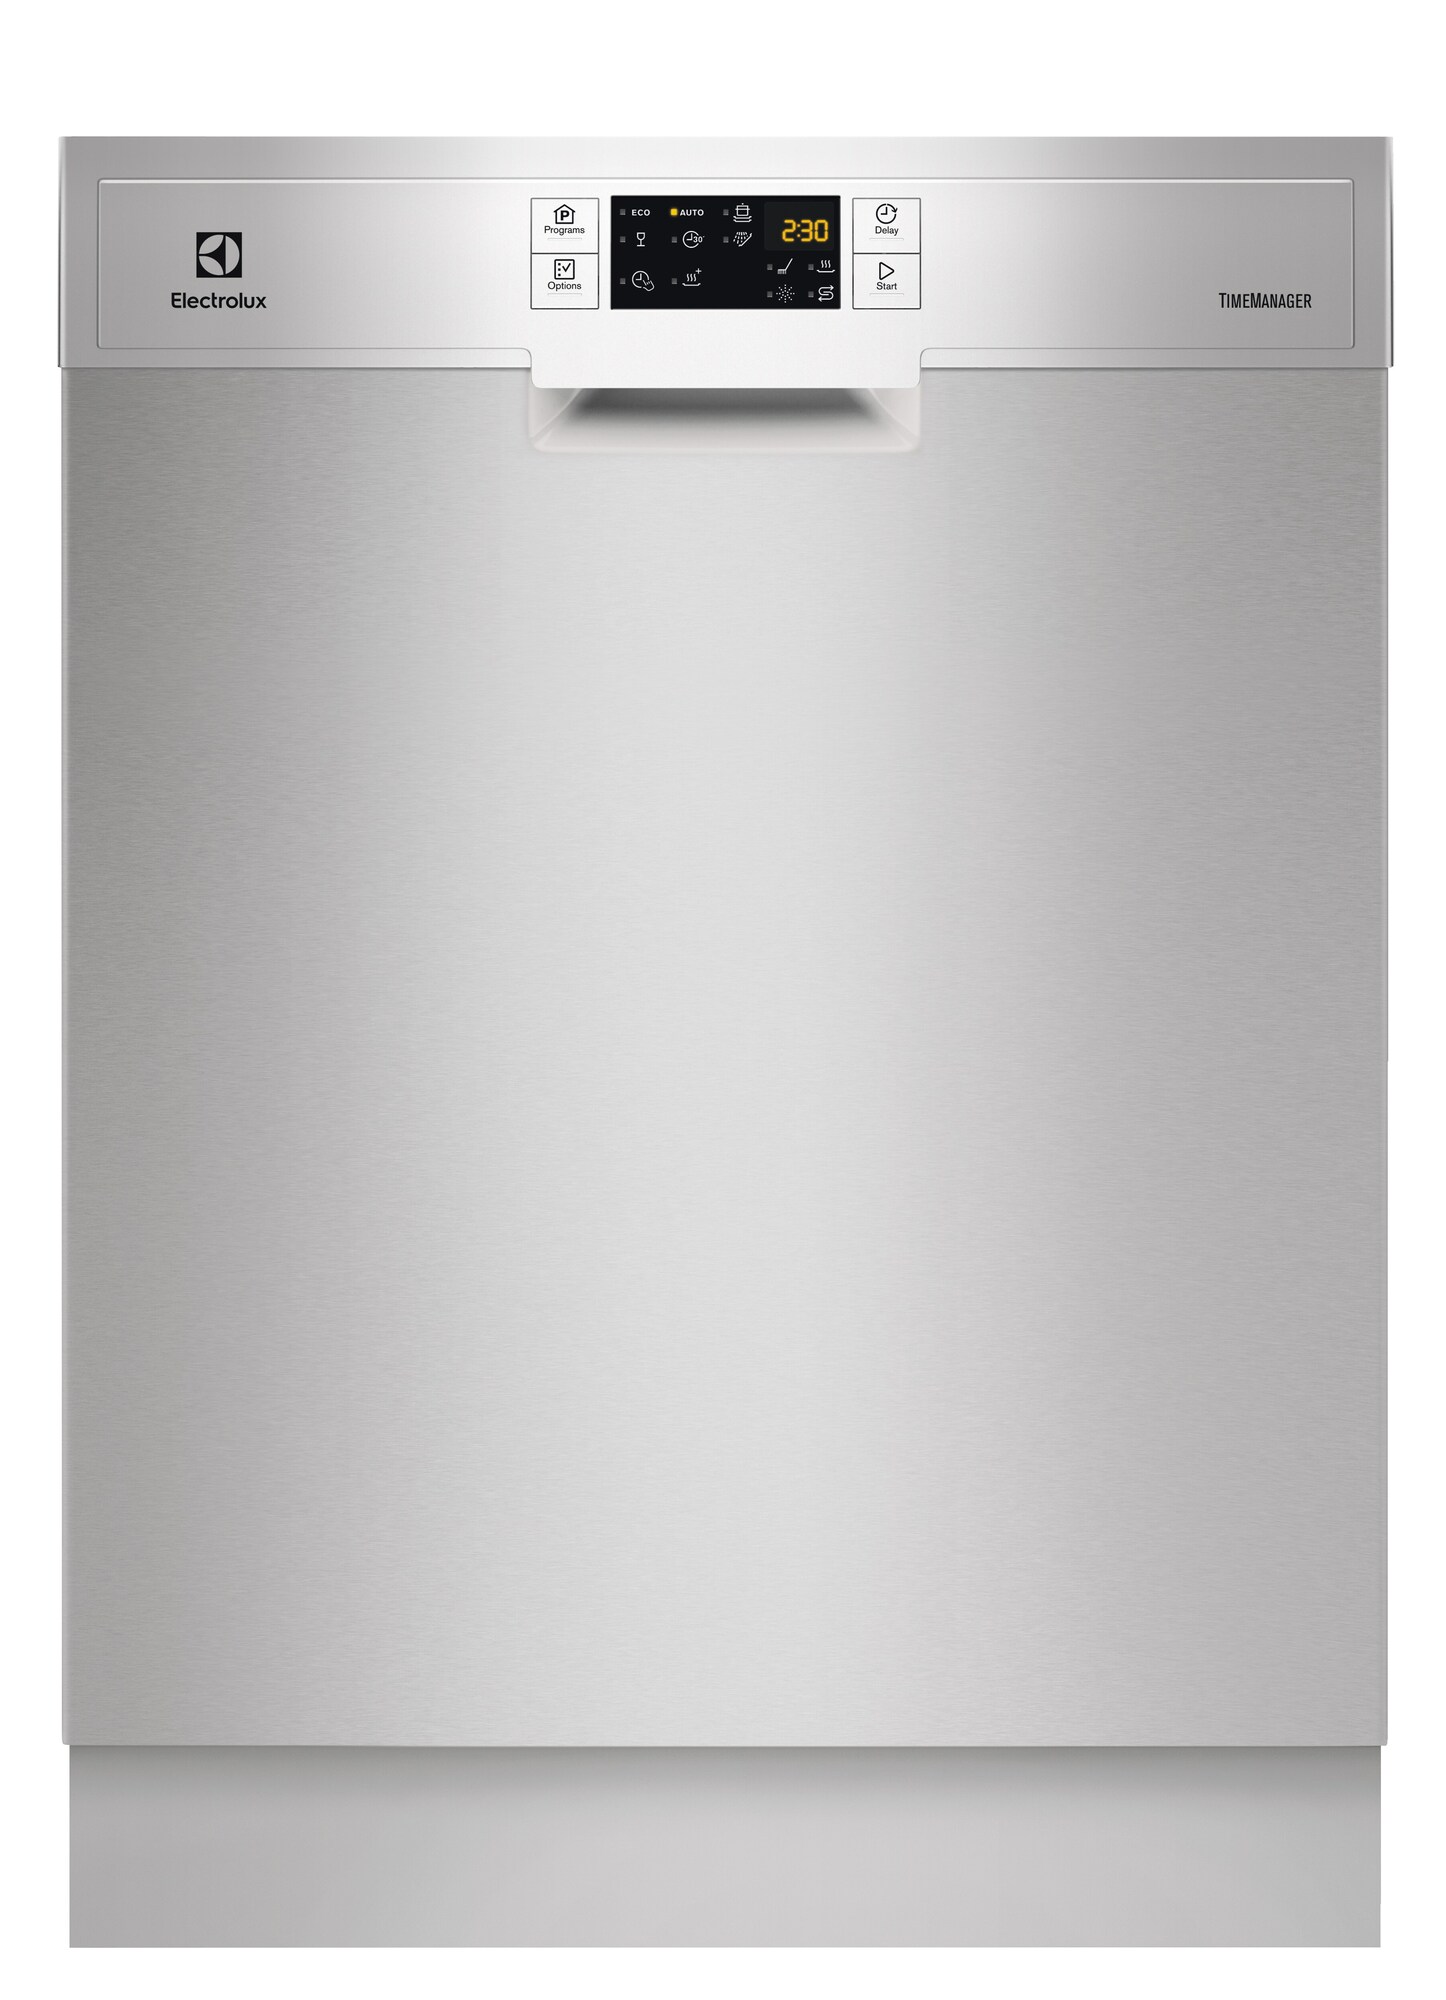 4 Bedste Samsung Opvaskemaskine i 2023 | Se listen på Opvaskebakke.dk